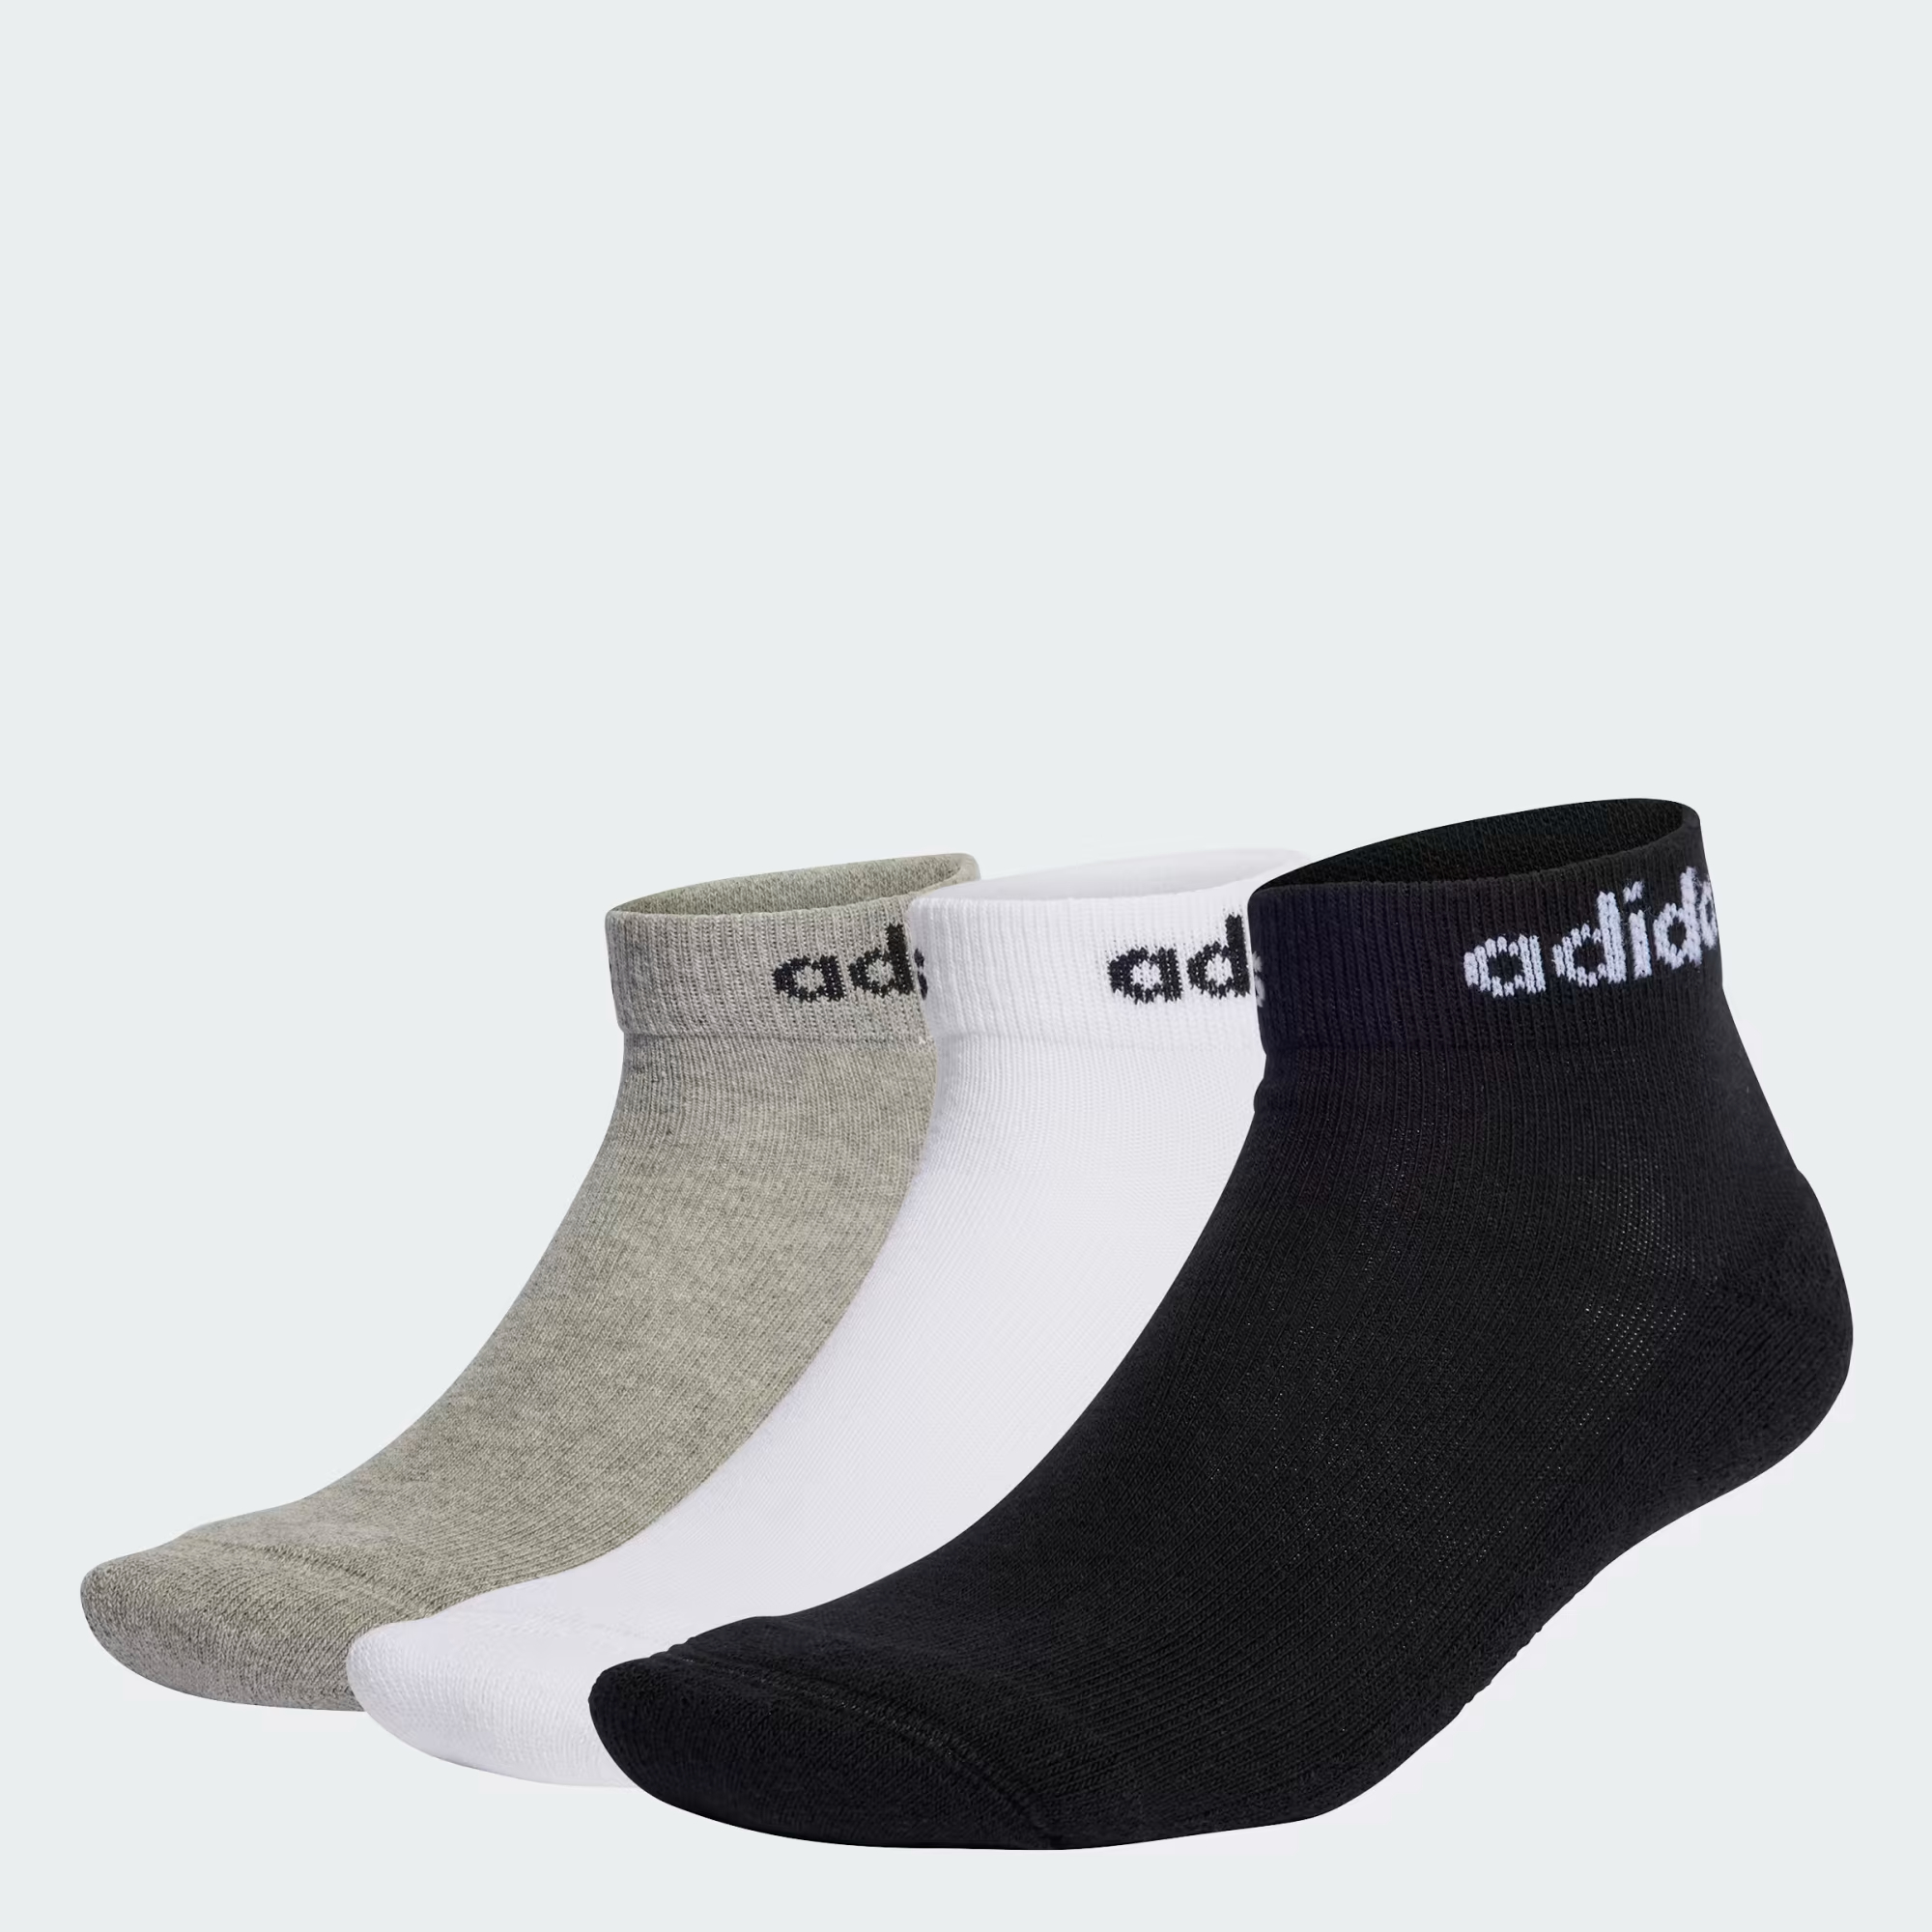 Набор носков Adidas для мужчин, из 3х пар, IC1304, размер XL, серо-бело-черные-83F7